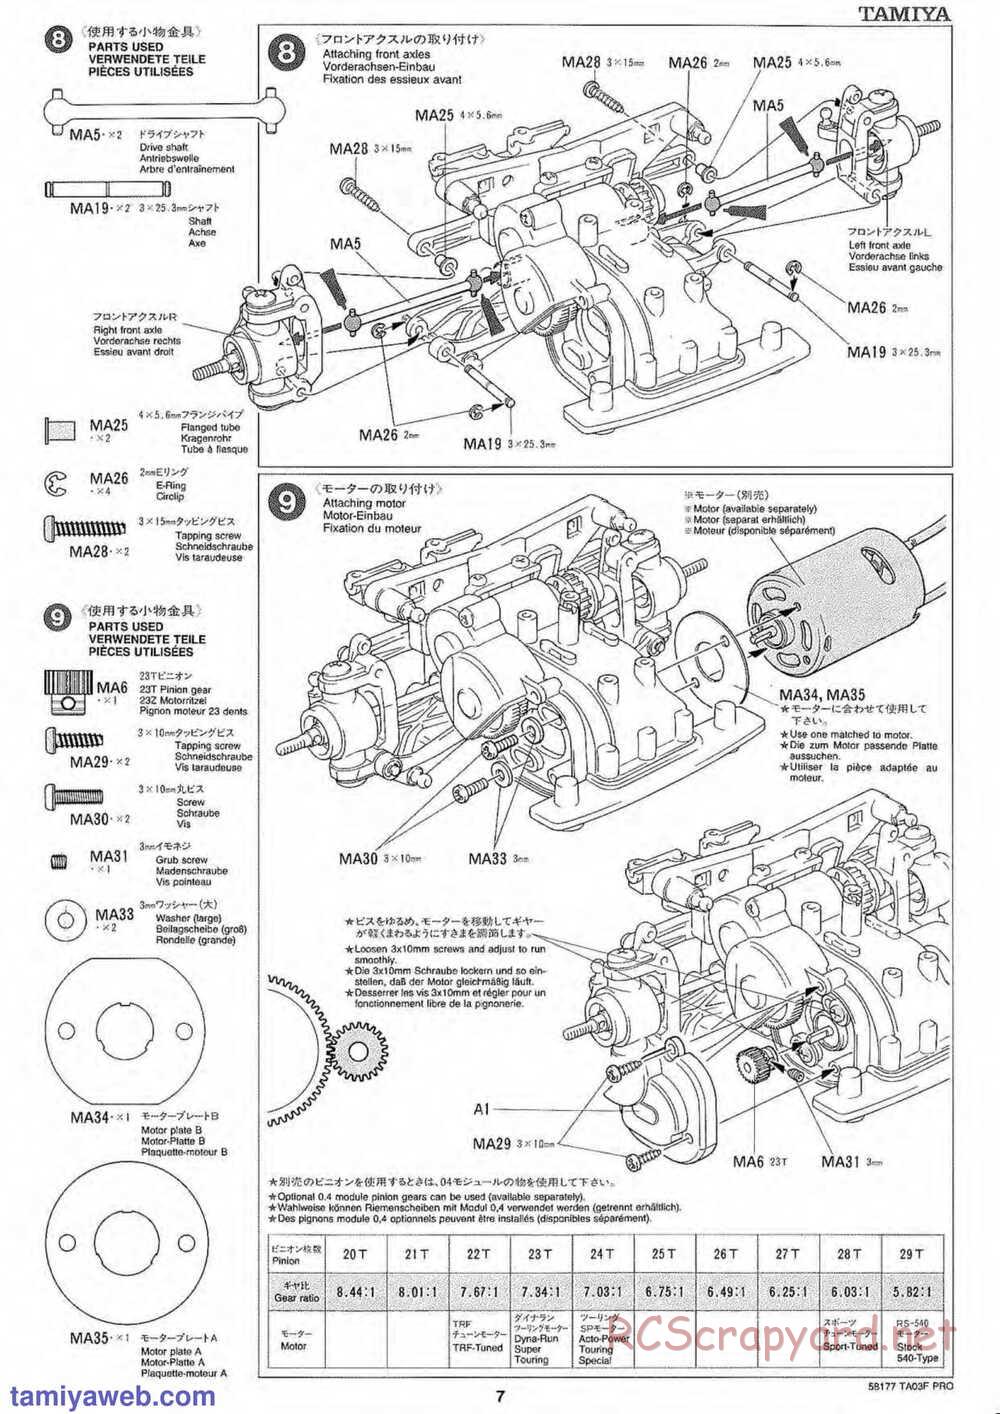 Tamiya - TA-03F Pro Chassis - Manual - Page 7